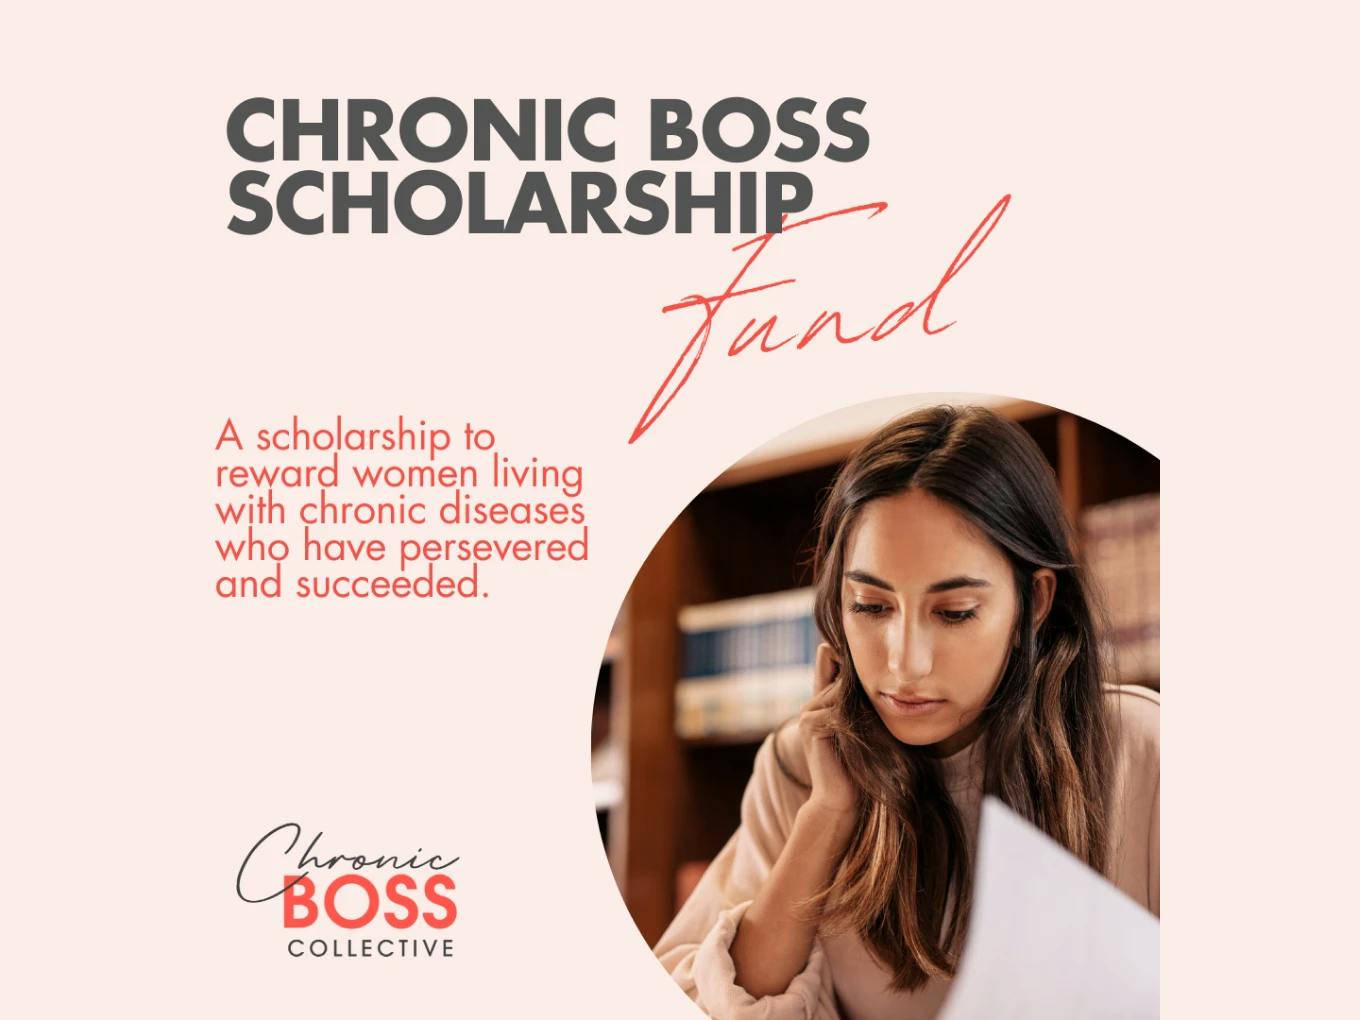 Chronic Boss Scholarship Fund